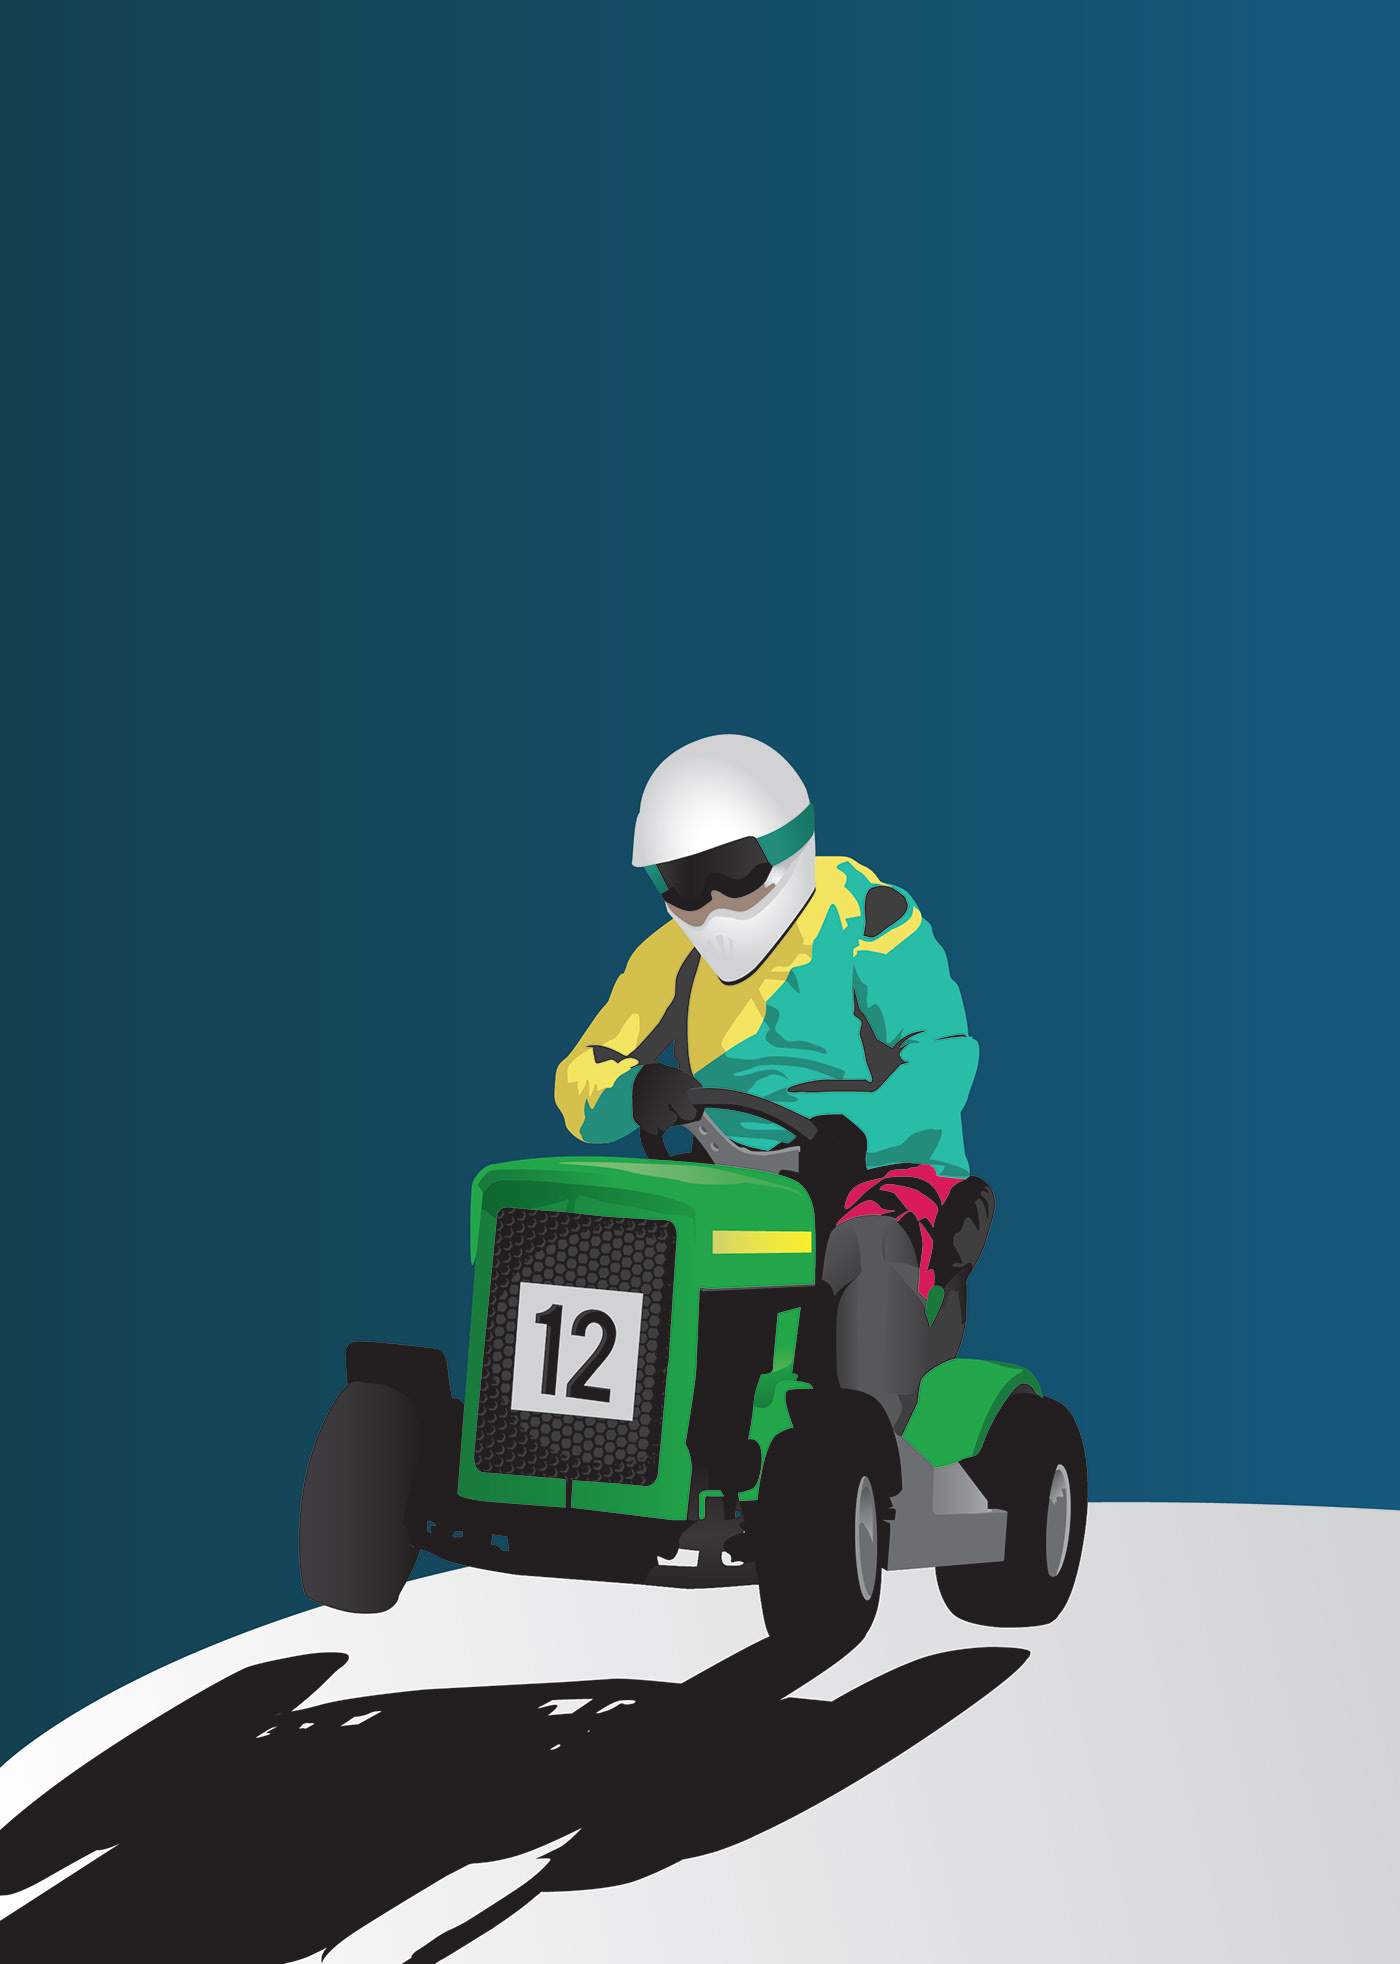 Vector Illustration lawnmower Motorsport Motor racing Endurance Race le mans Mille Miglia monza Futura